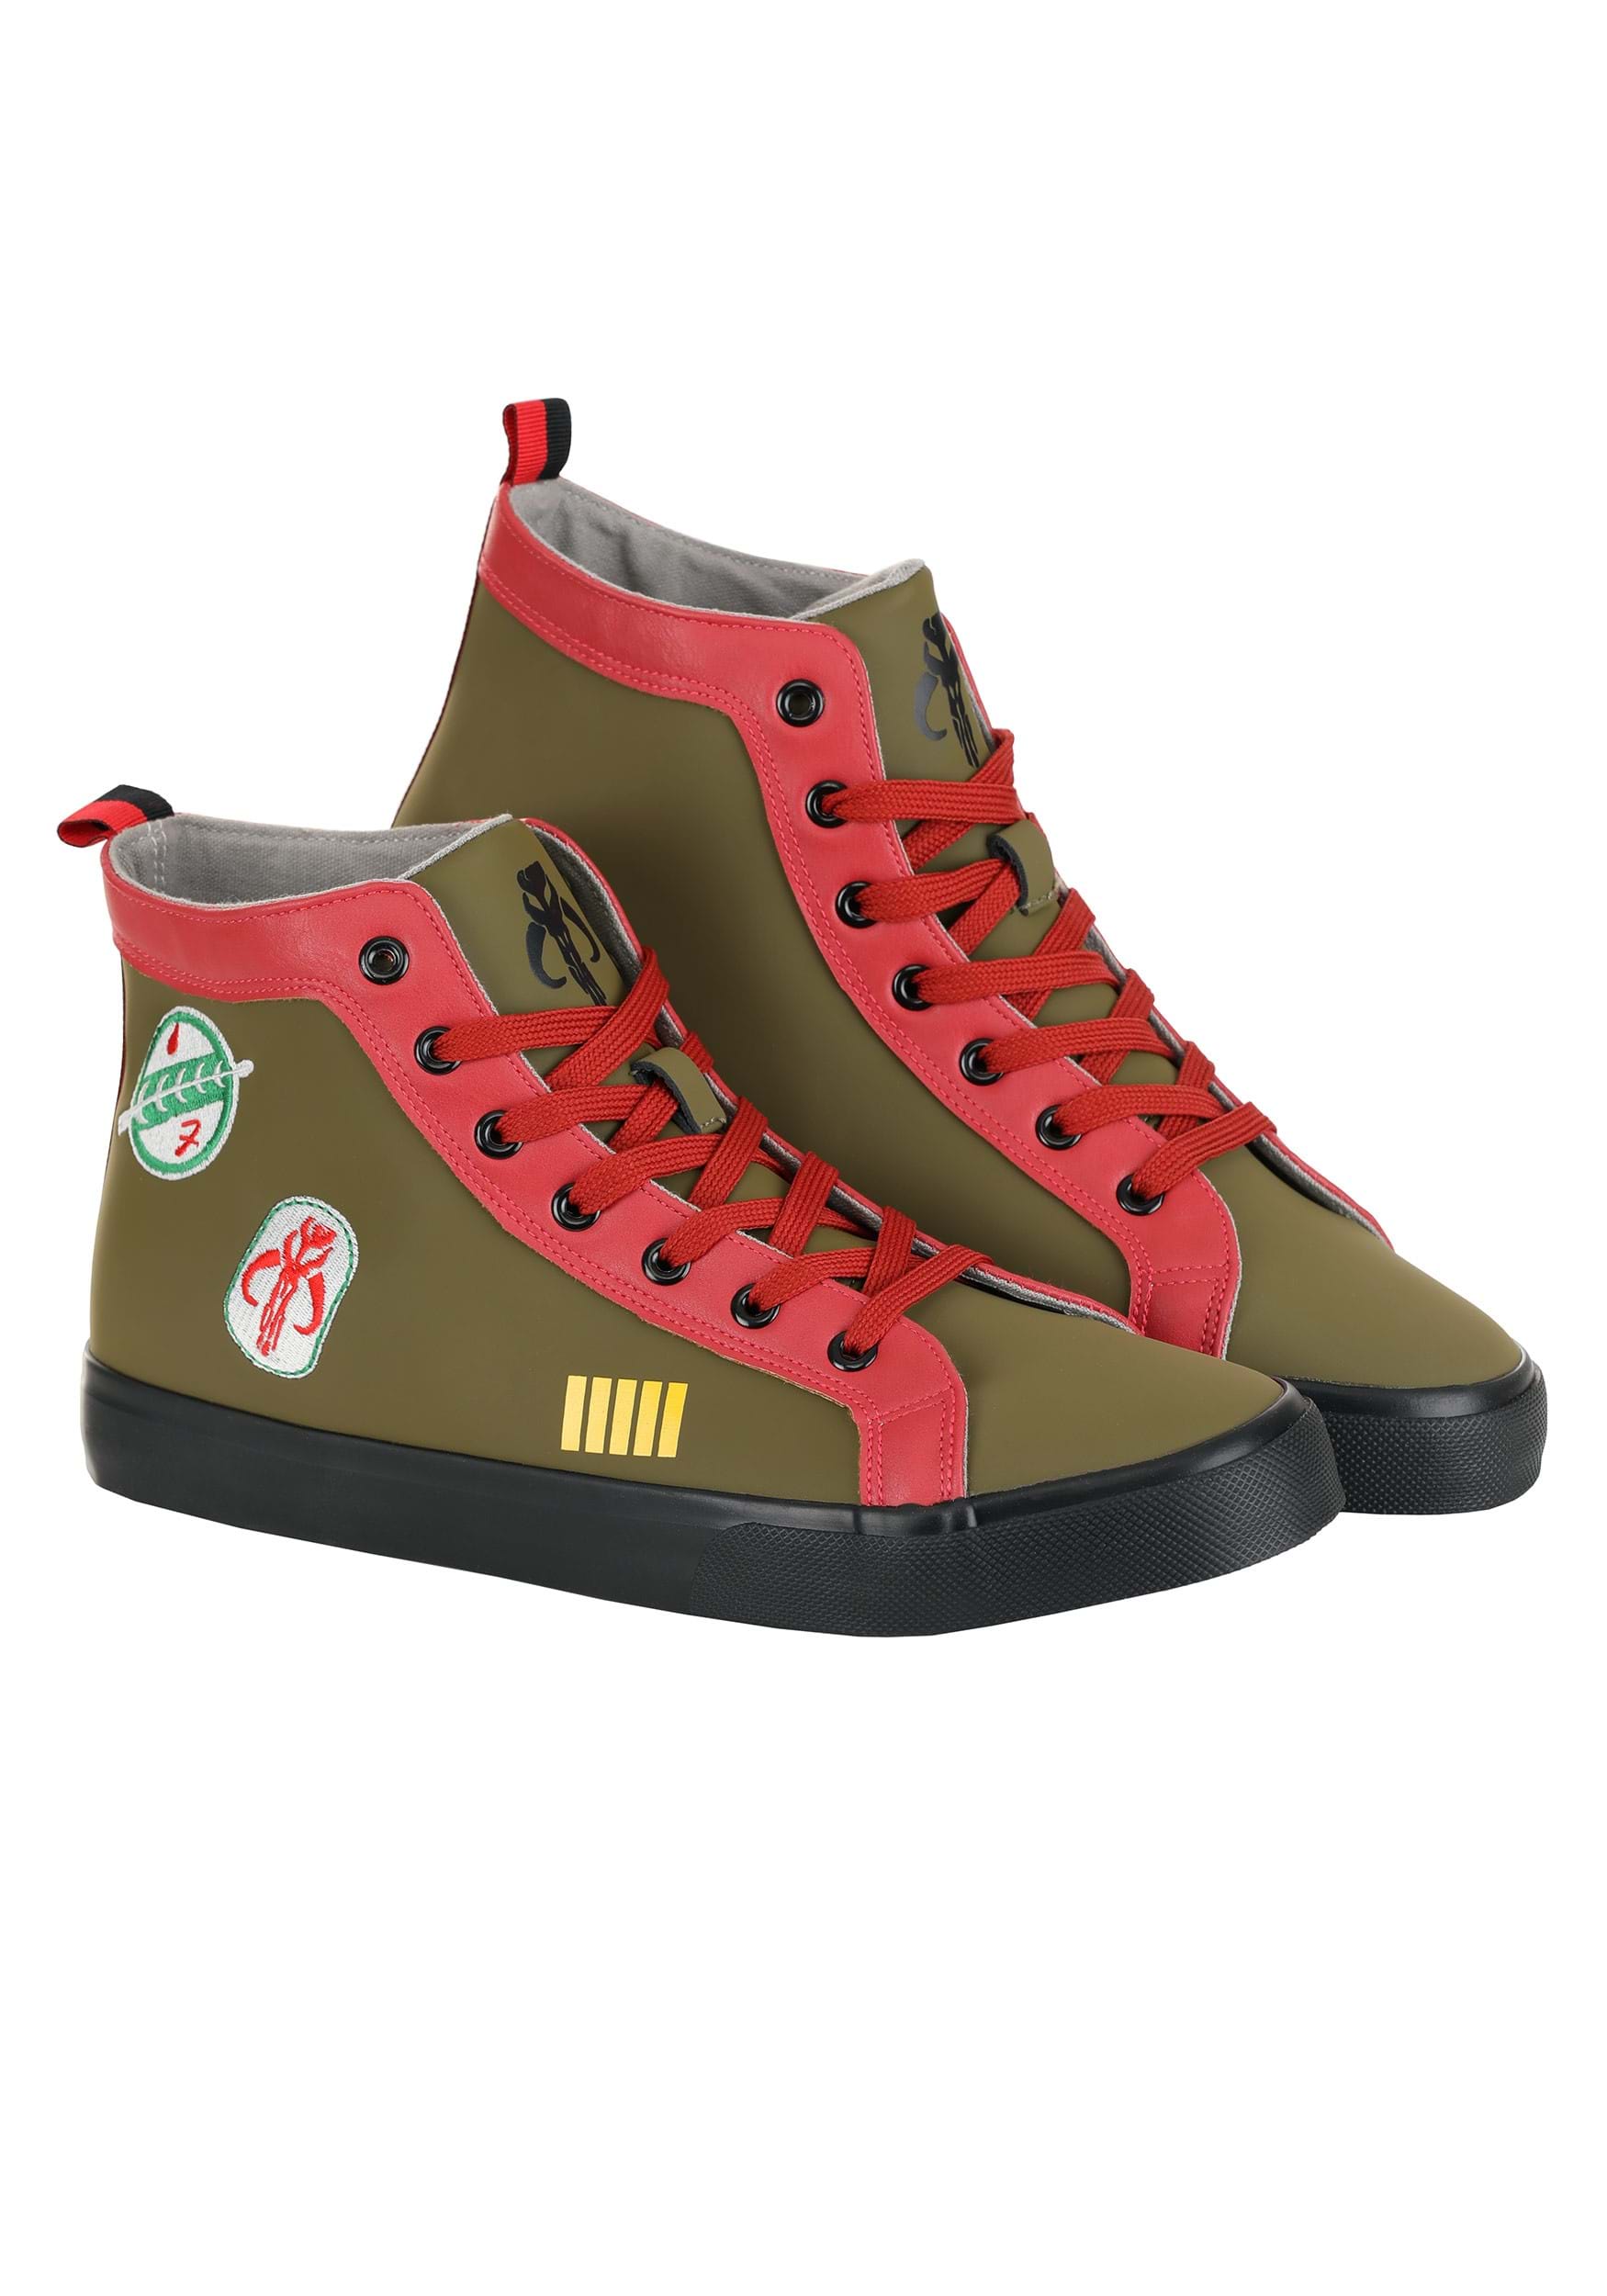 Gucci x Mickey Air Jordan 13 Sneakers Shoes Hot 2022 Disney Gifts